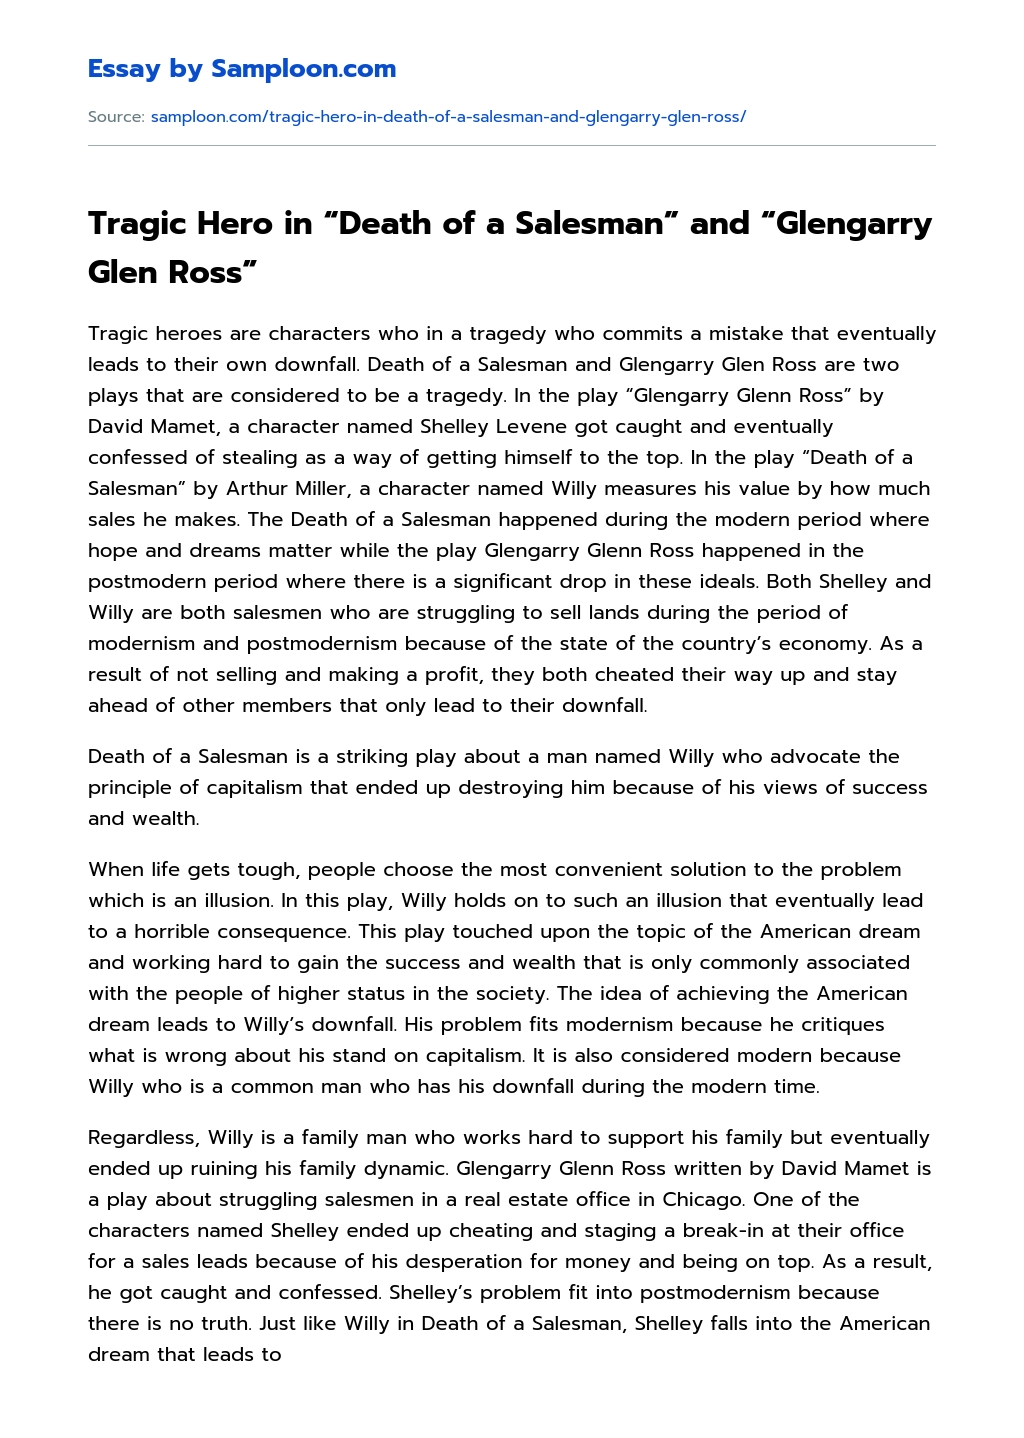 Tragic Hero in “Death of a Salesman” and “Glengarry Glen Ross” essay